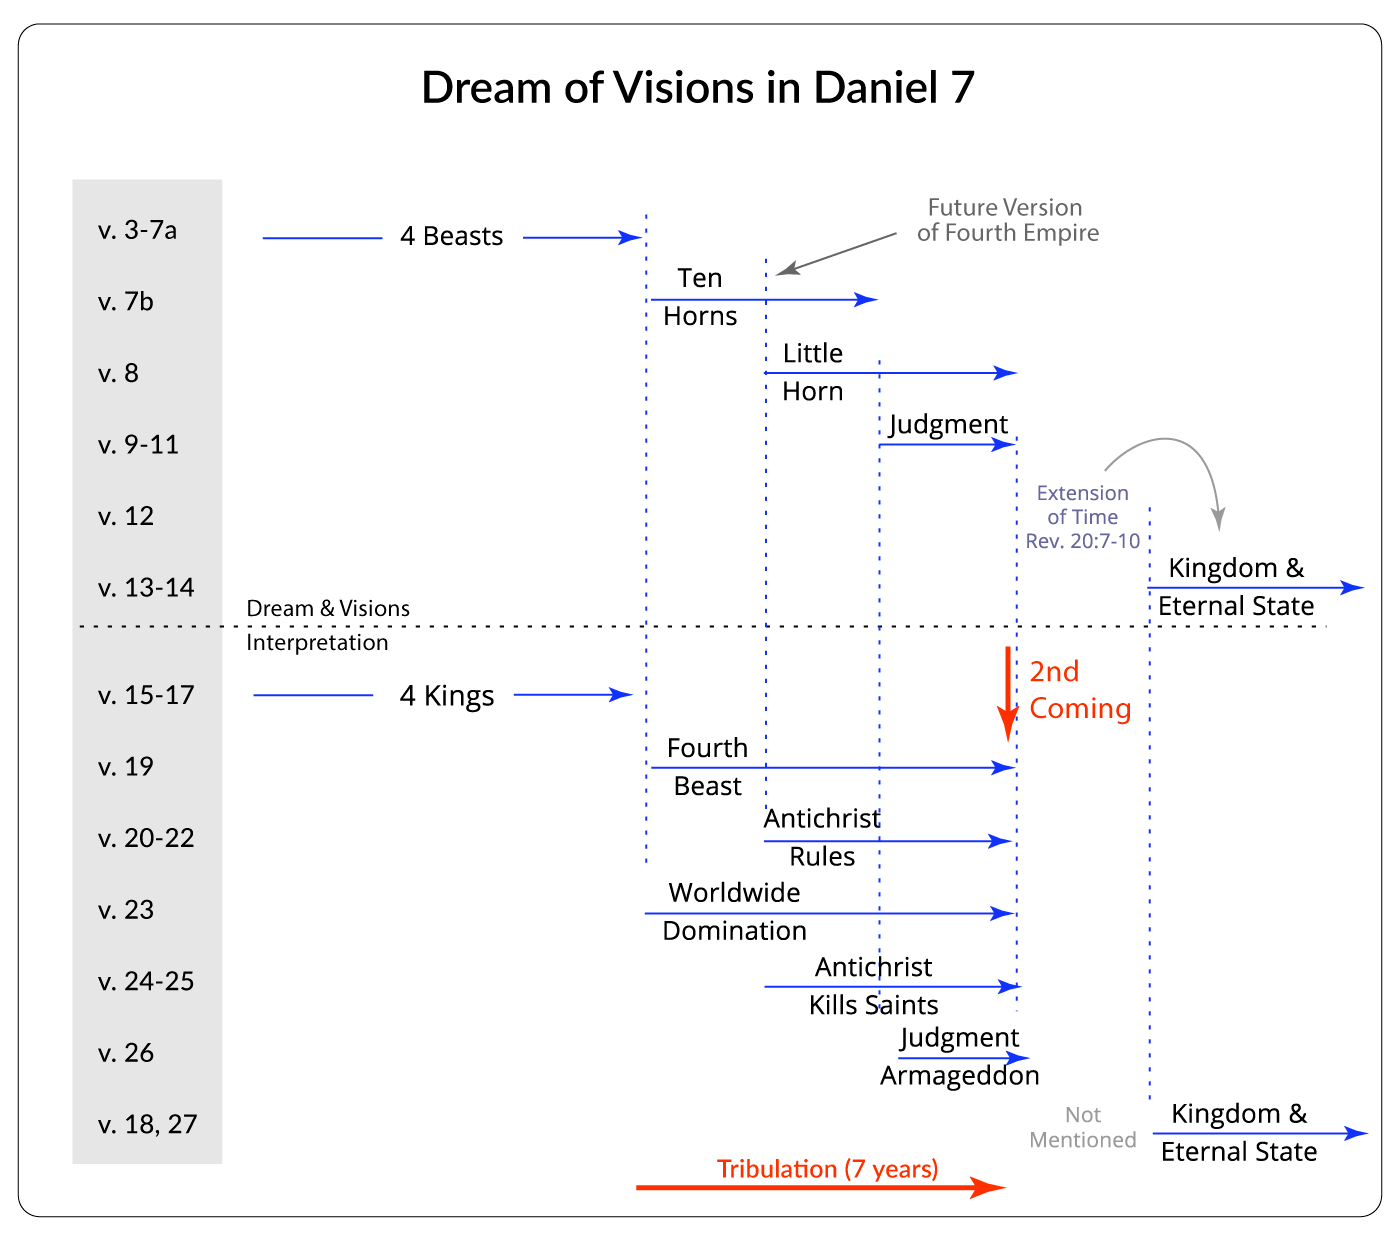 Interpretation of Daniel 7